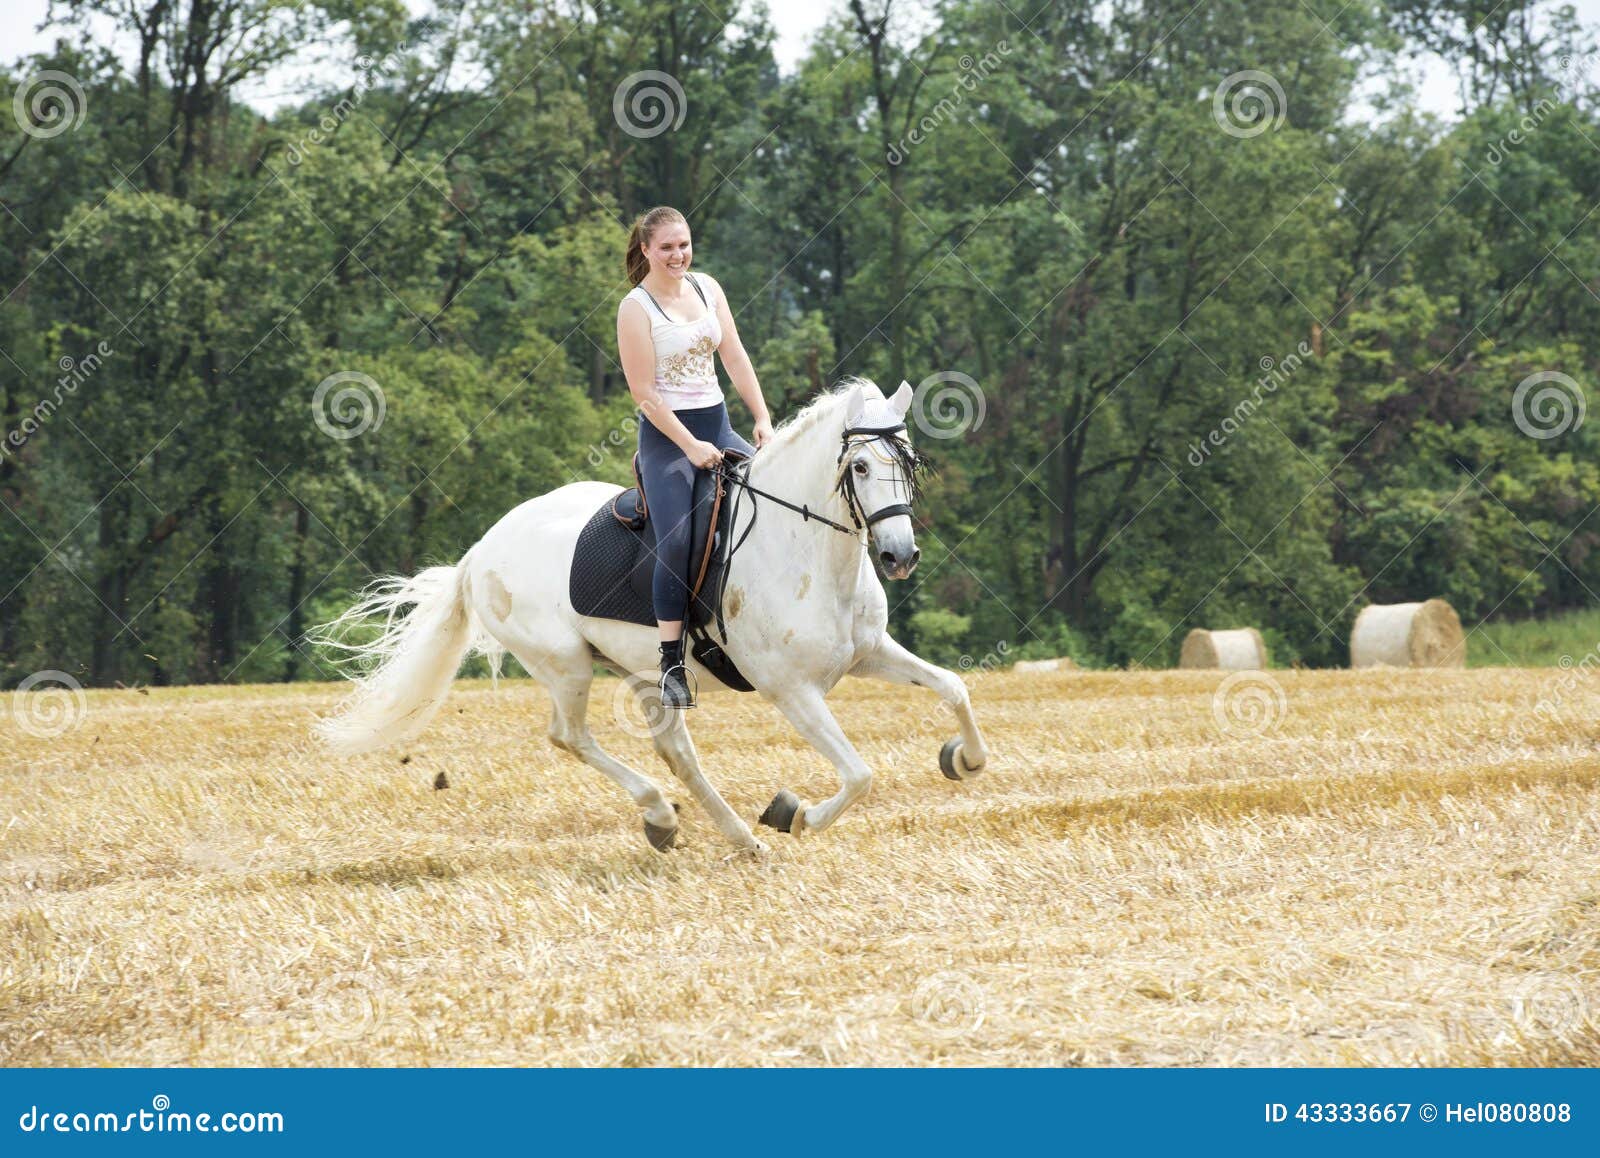 woman on white horseback on stubblefield